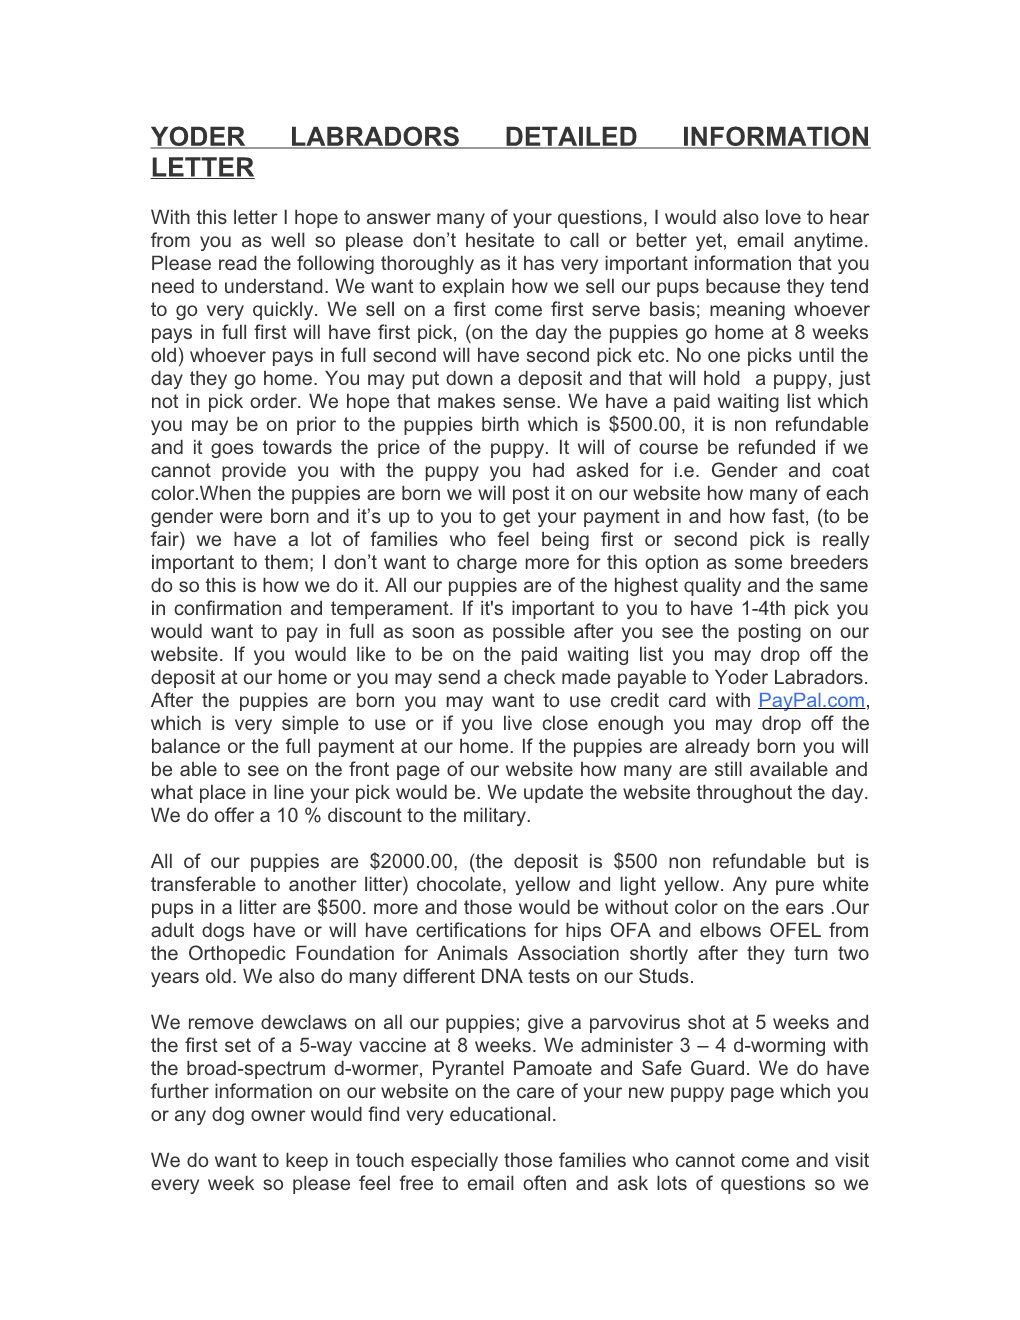 Yoder Labradors Detailed Information Letter